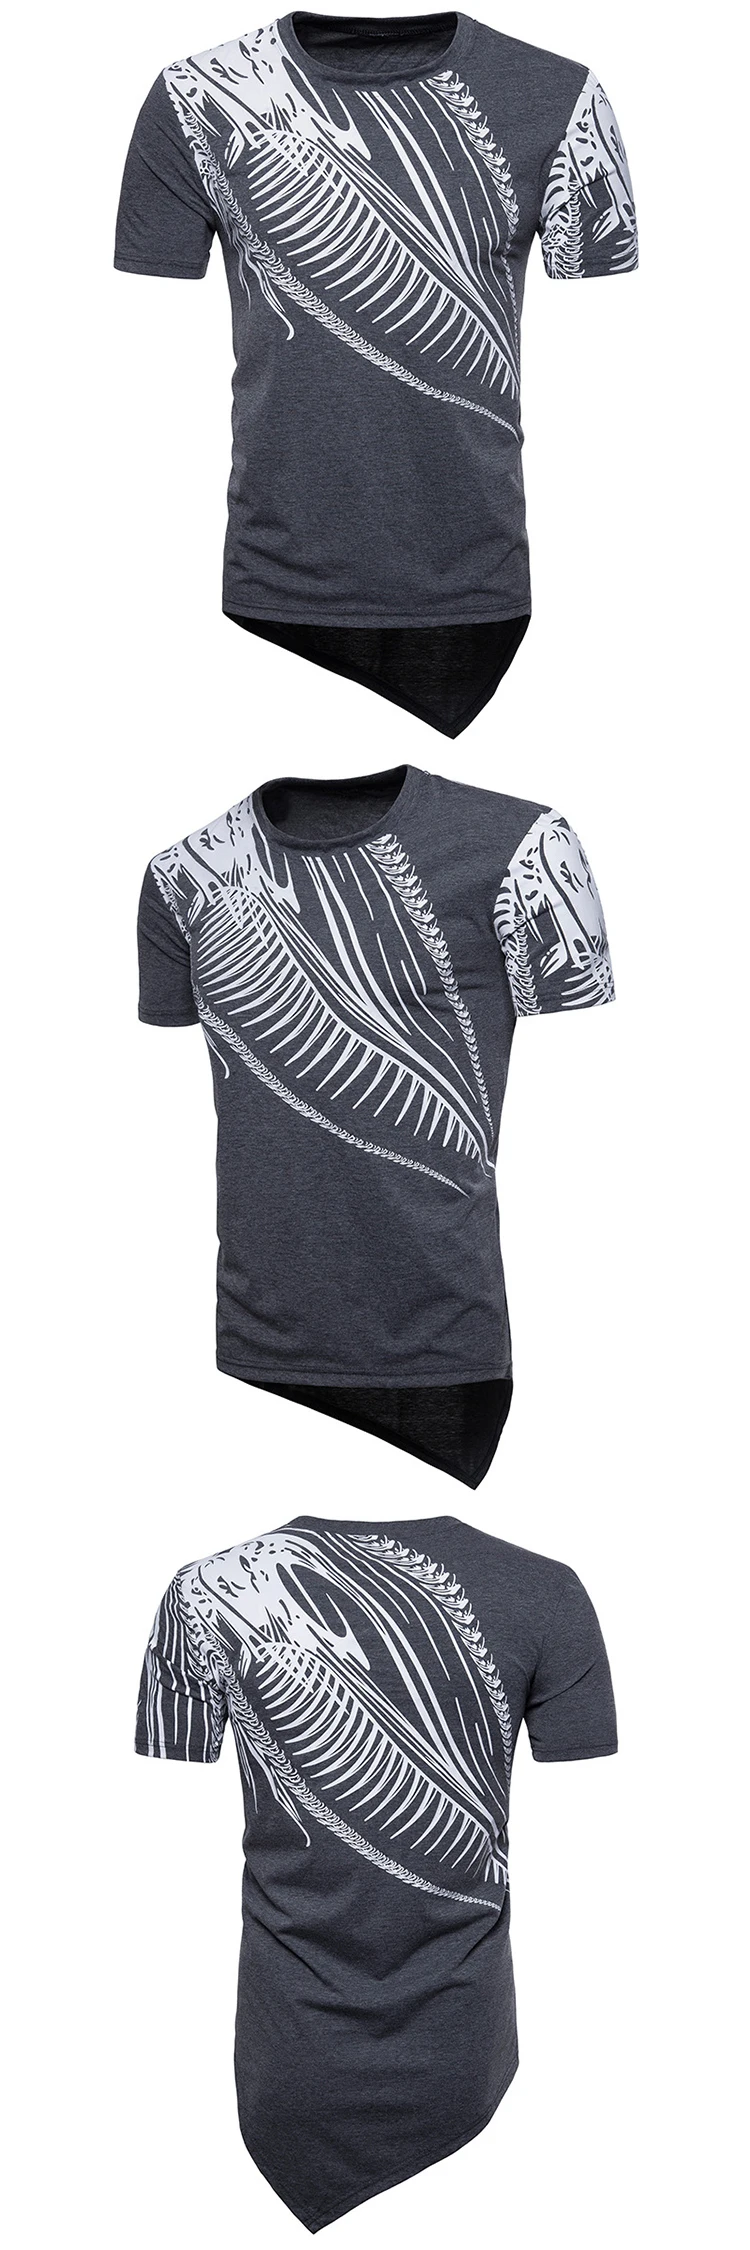 Printed Men's Black White Grey 100% Cotton T Shirt For Men - Buy T ...